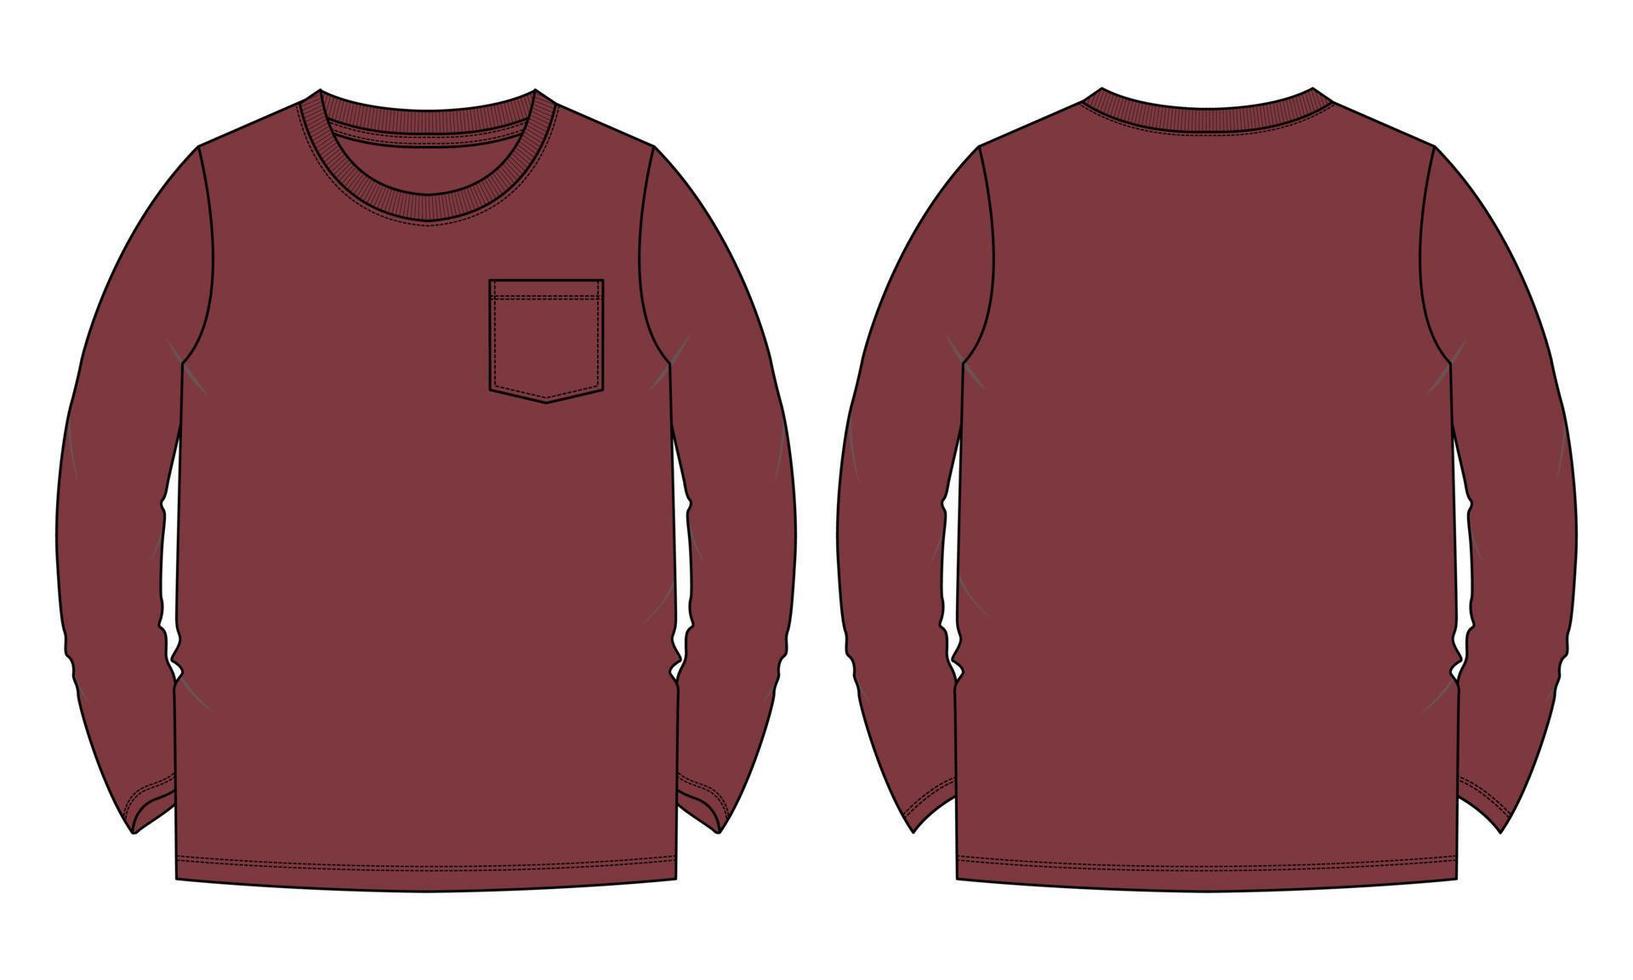 camiseta de manga larga moda técnica boceto plano ilustración vectorial plantilla de color rojo vector